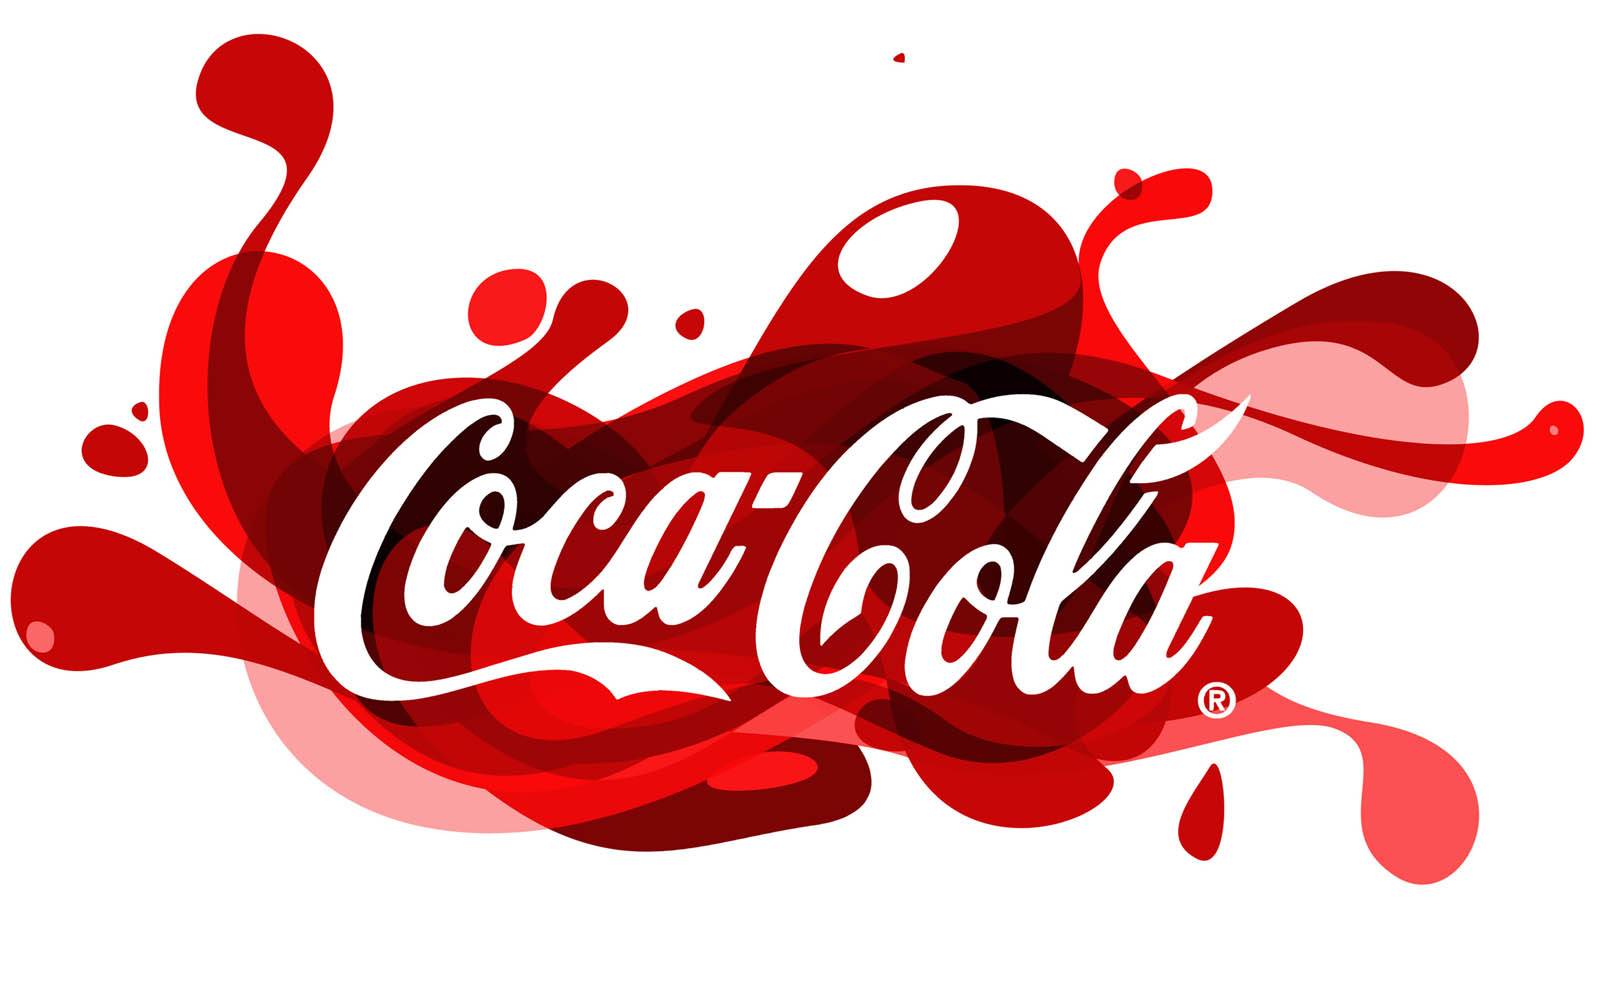 78+] Coca Cola Wallpaper - WallpaperSafari